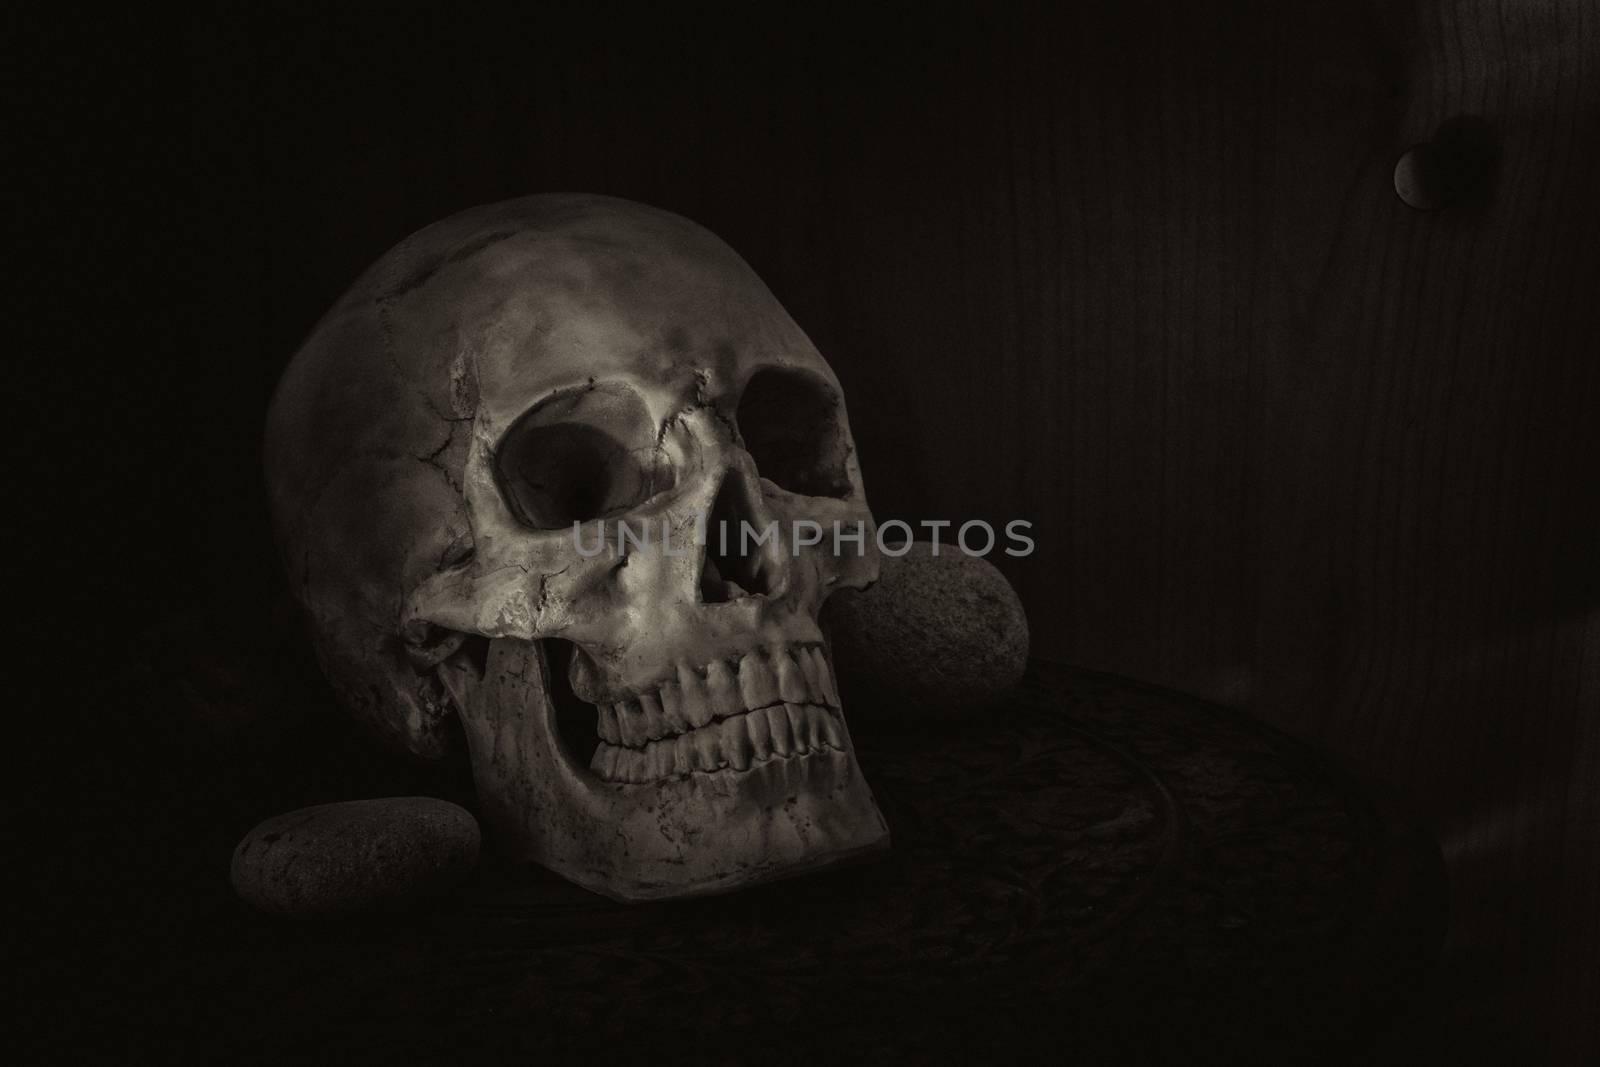 Human skull by Portokalis